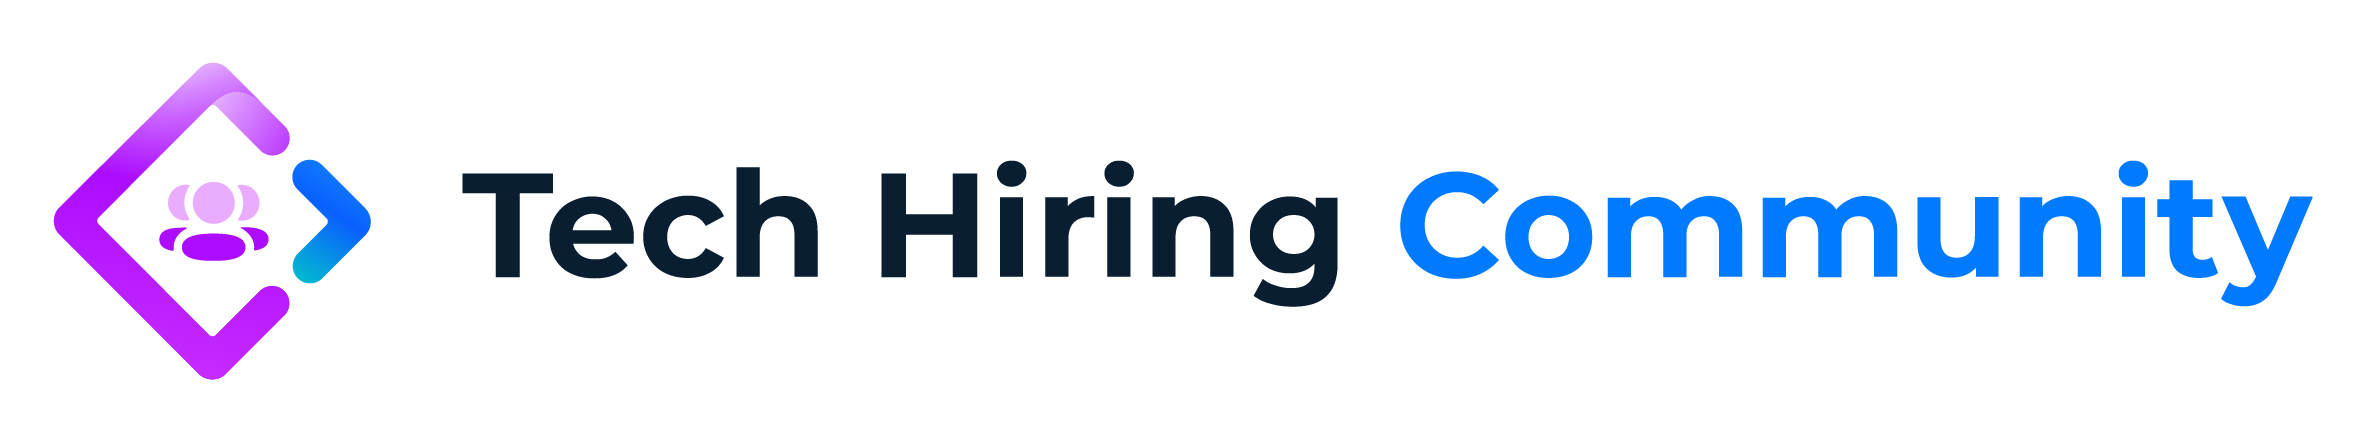 Logo Tech Hiring Community